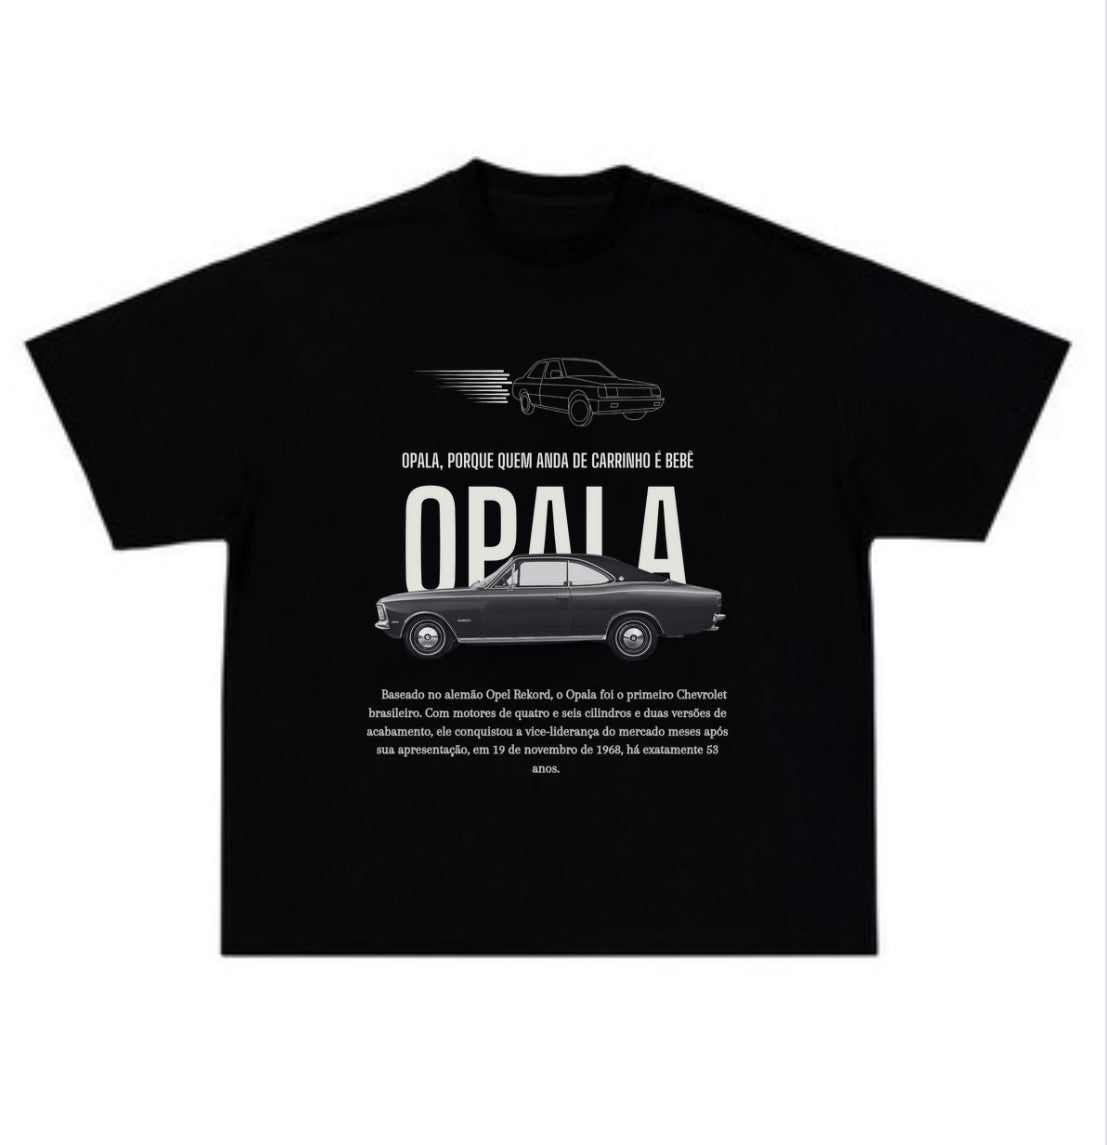 Encomendar Camisa unisex: "Opala" Black